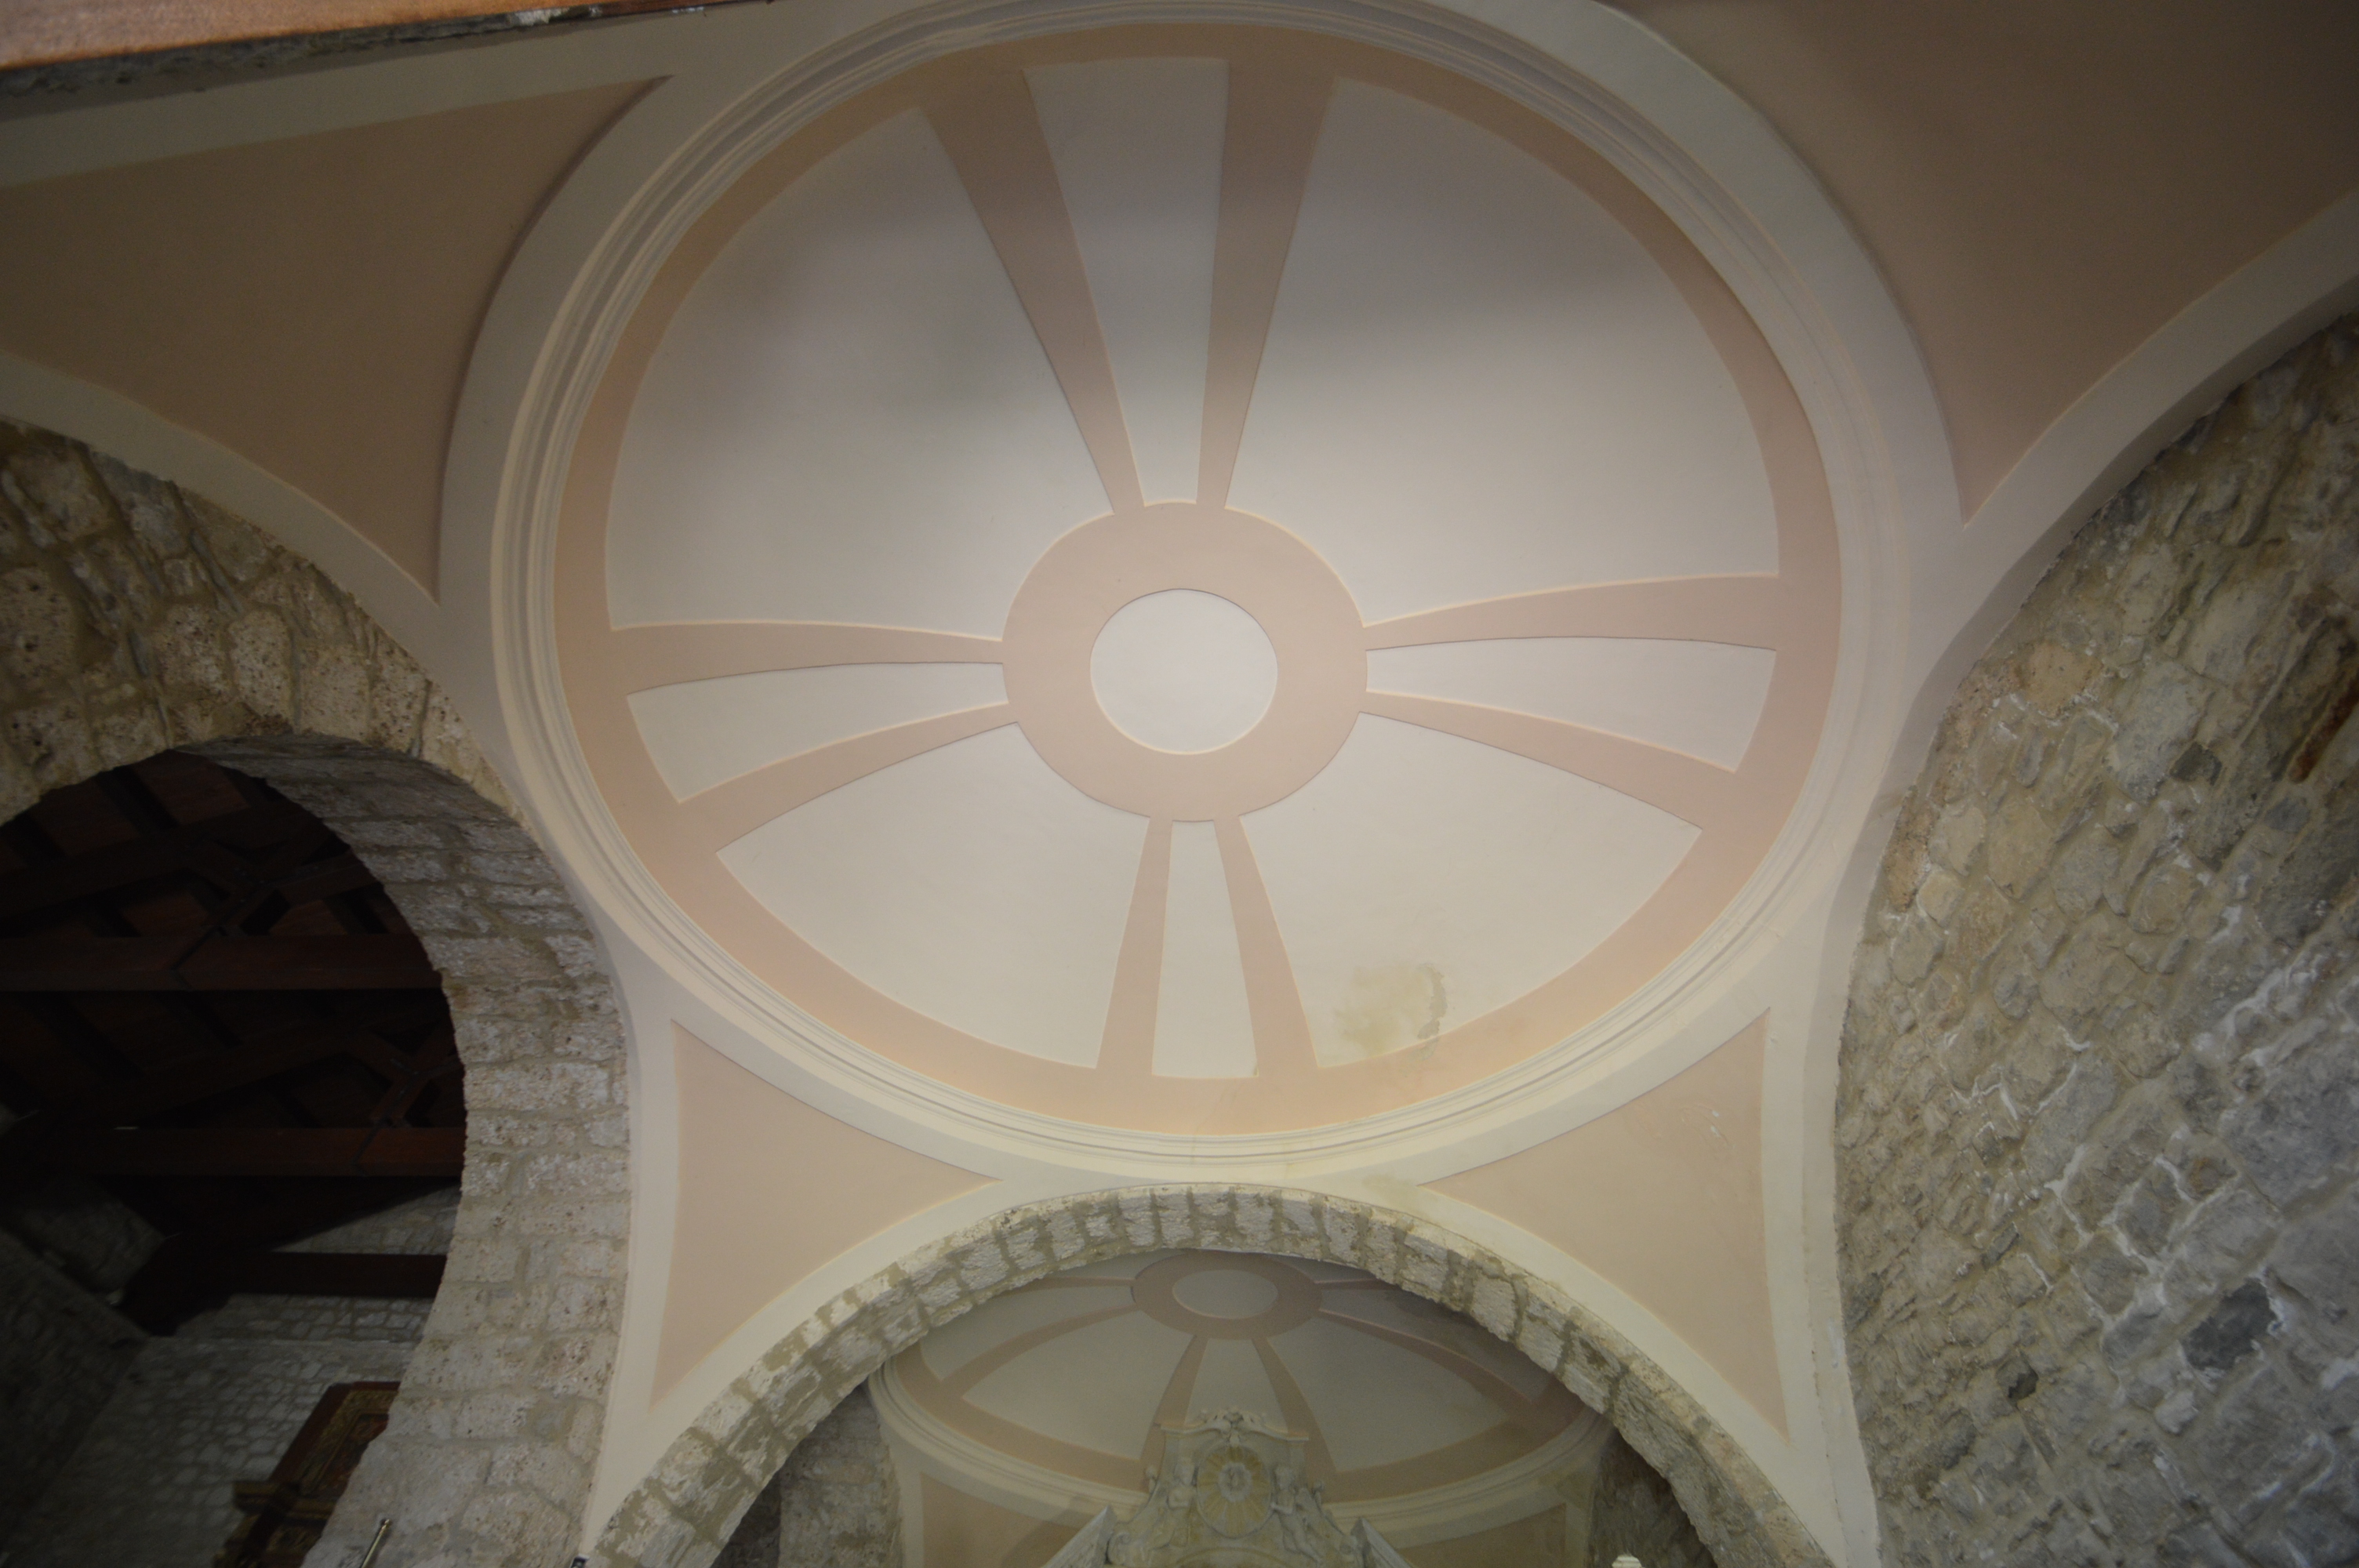  ceiling-of-church